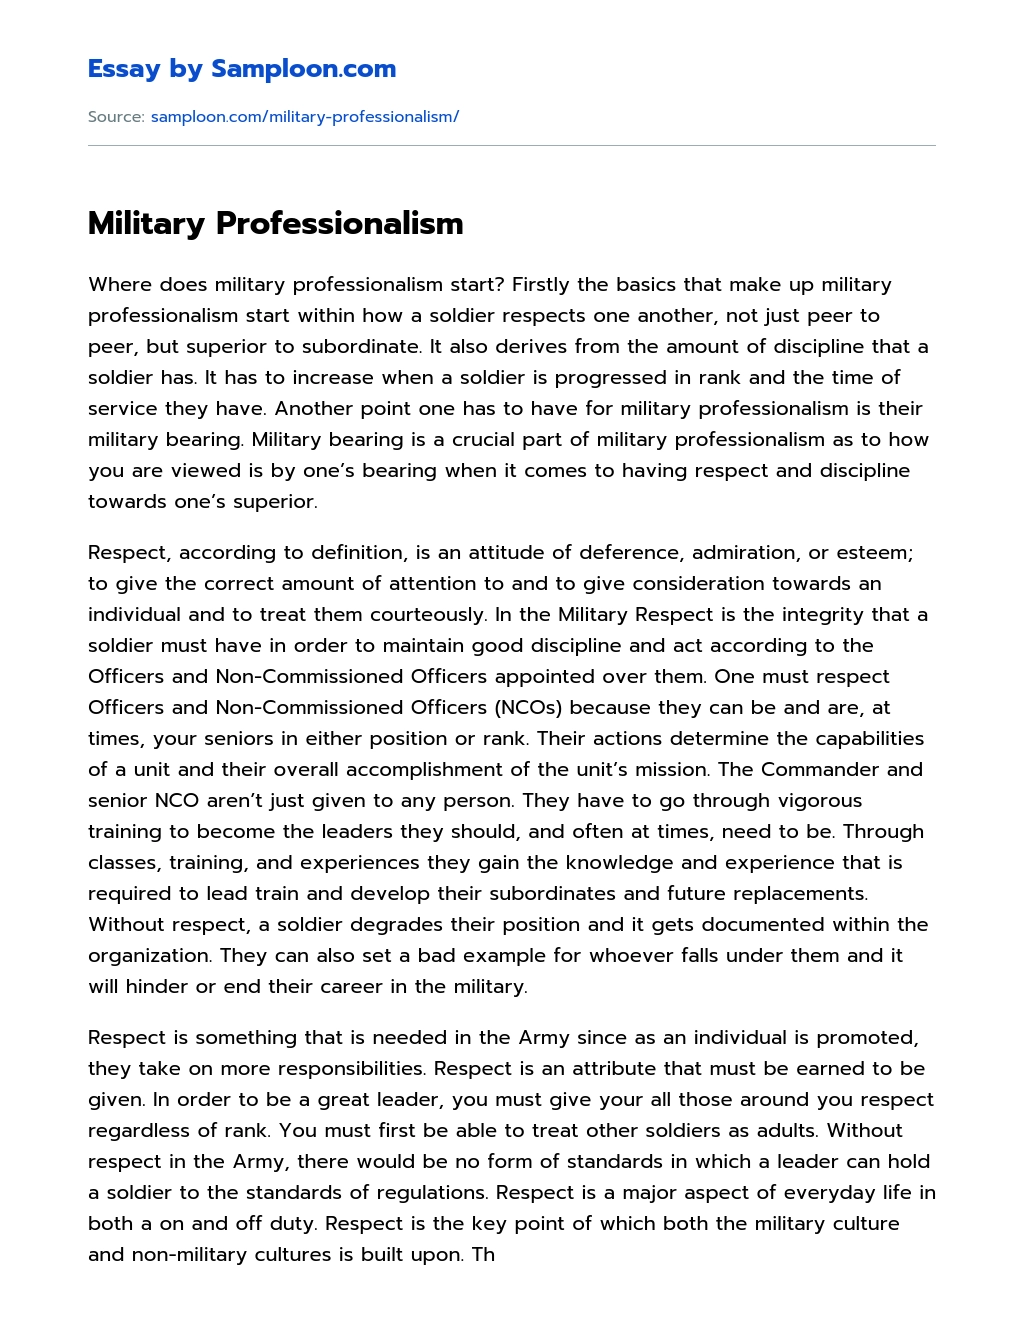 argumentative essay military rule is better than civilian rule